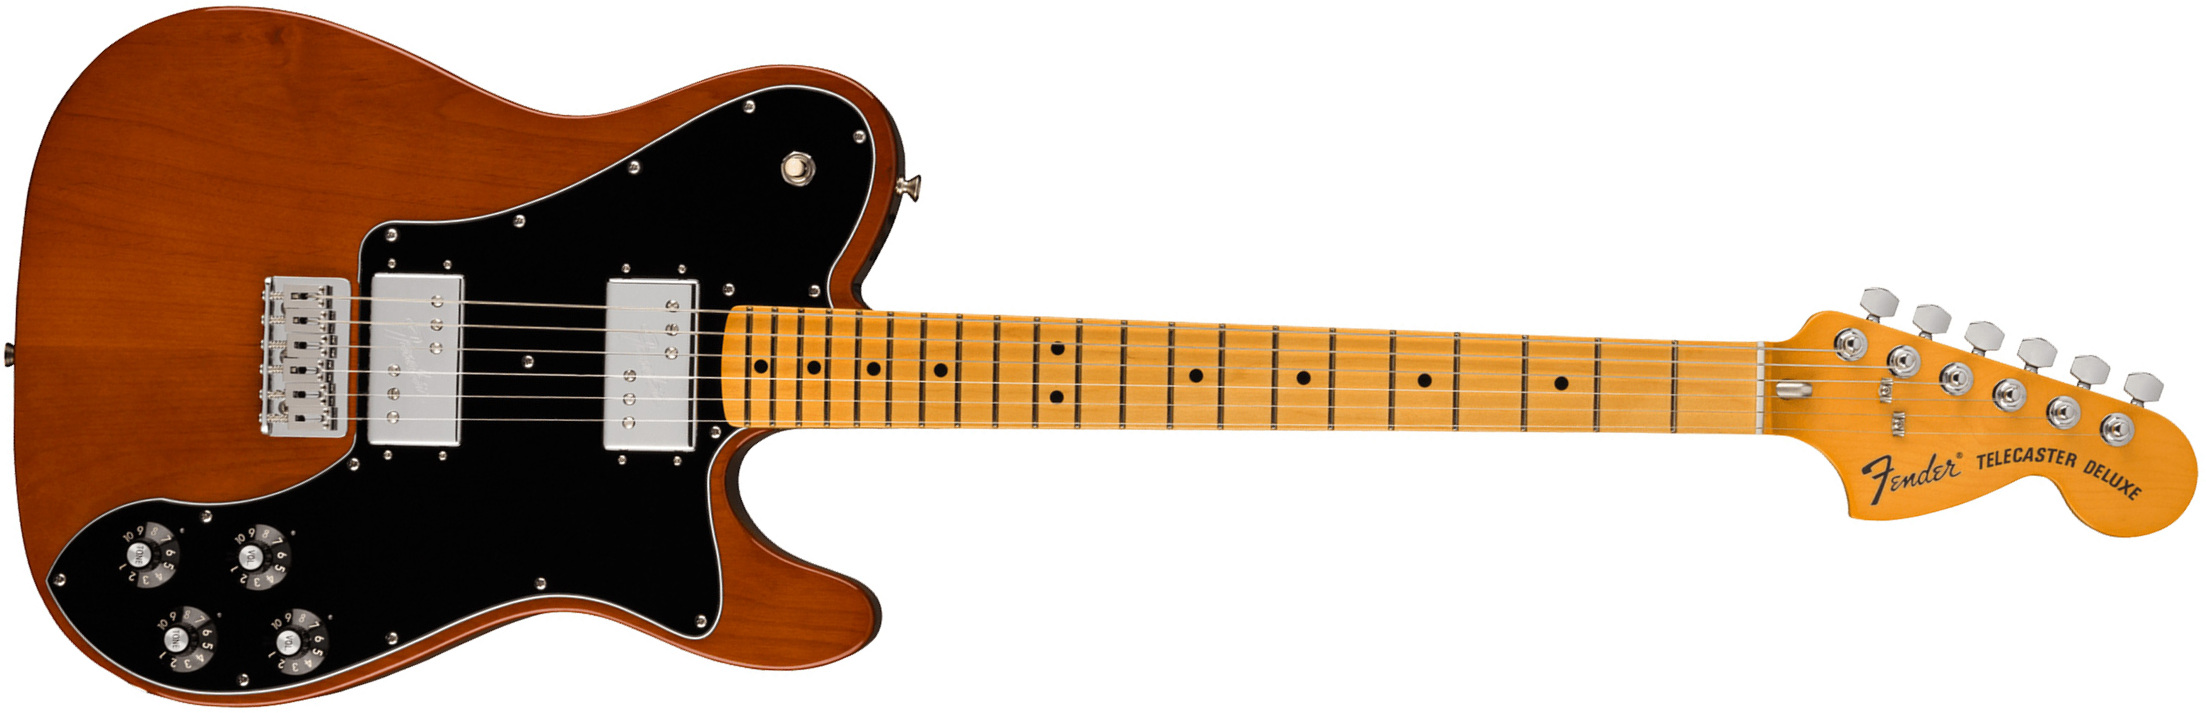 Fender Tele Deluxe 1975 American Vintage Ii Usa 2h Ht Mn - Mocha - Guitarra eléctrica con forma de tel - Main picture